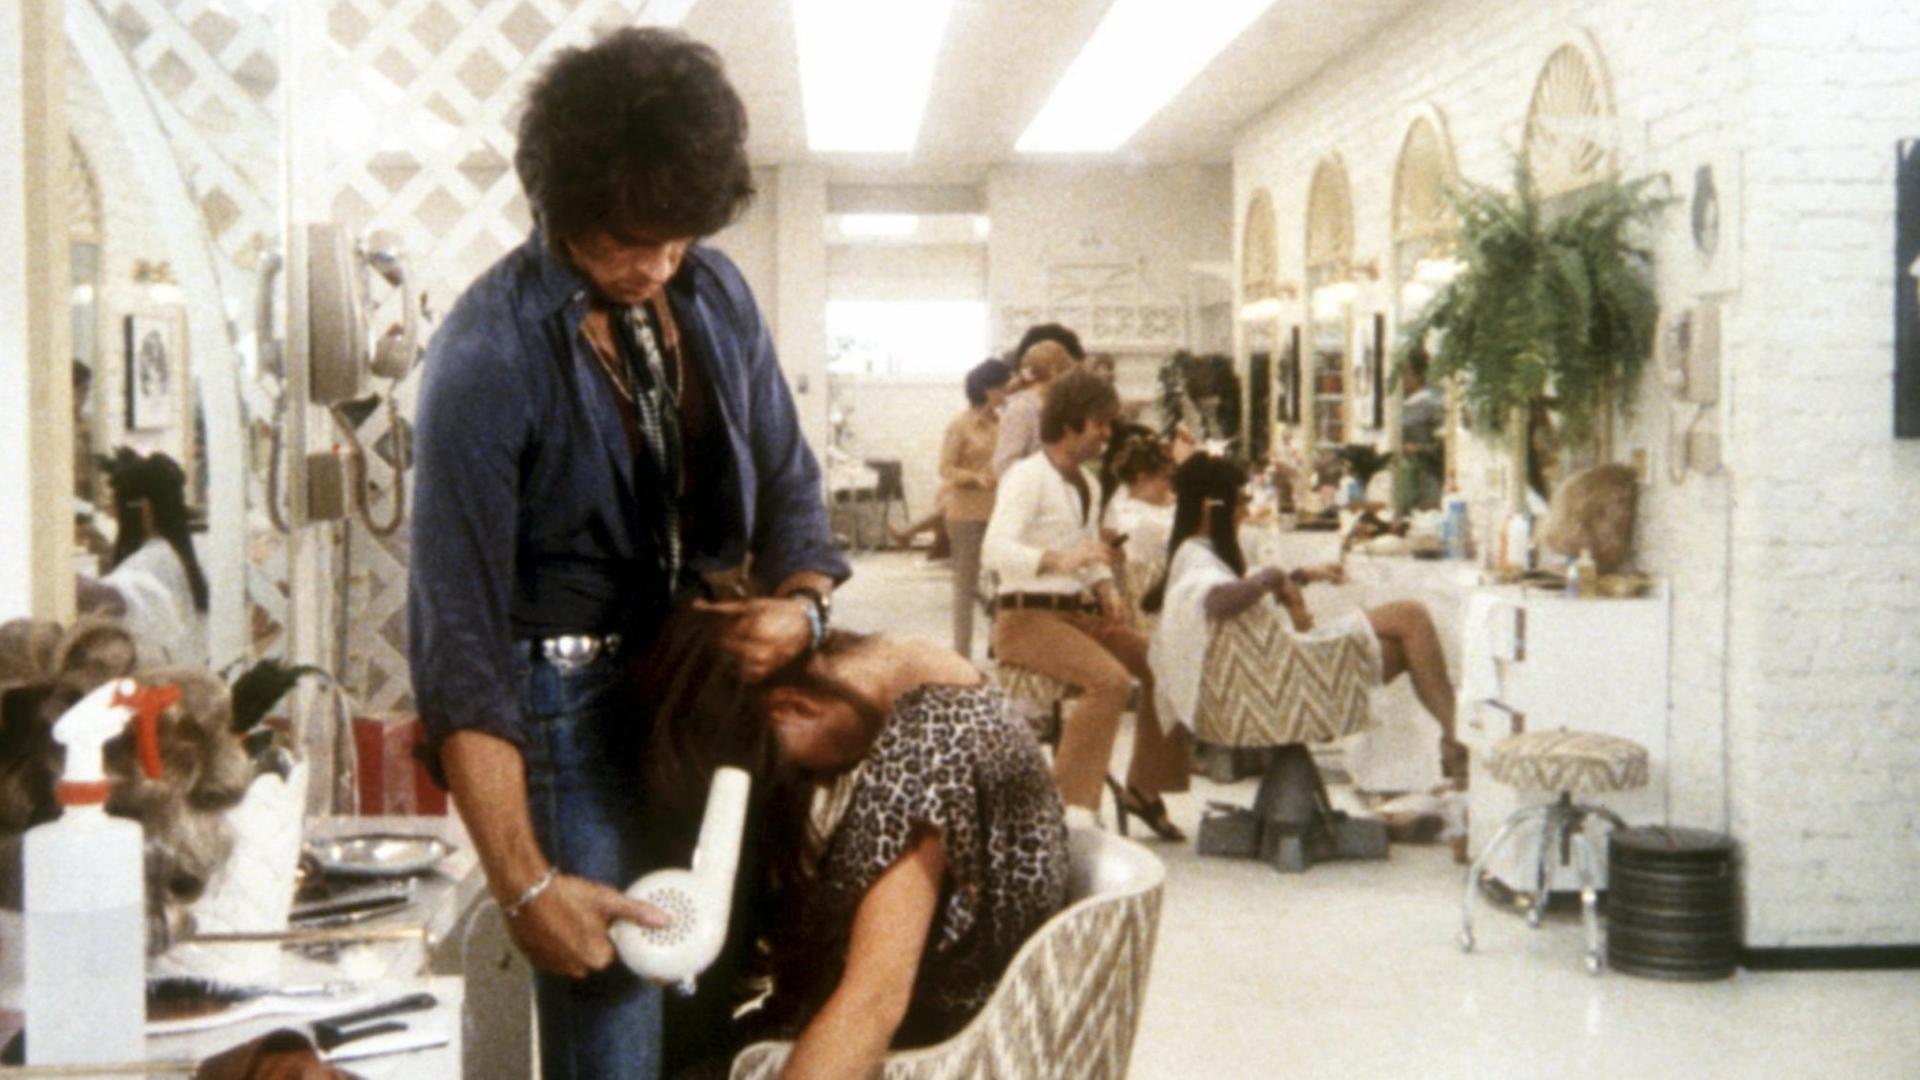 Szene aus "Shampoo" (1974) von Hal Ashby